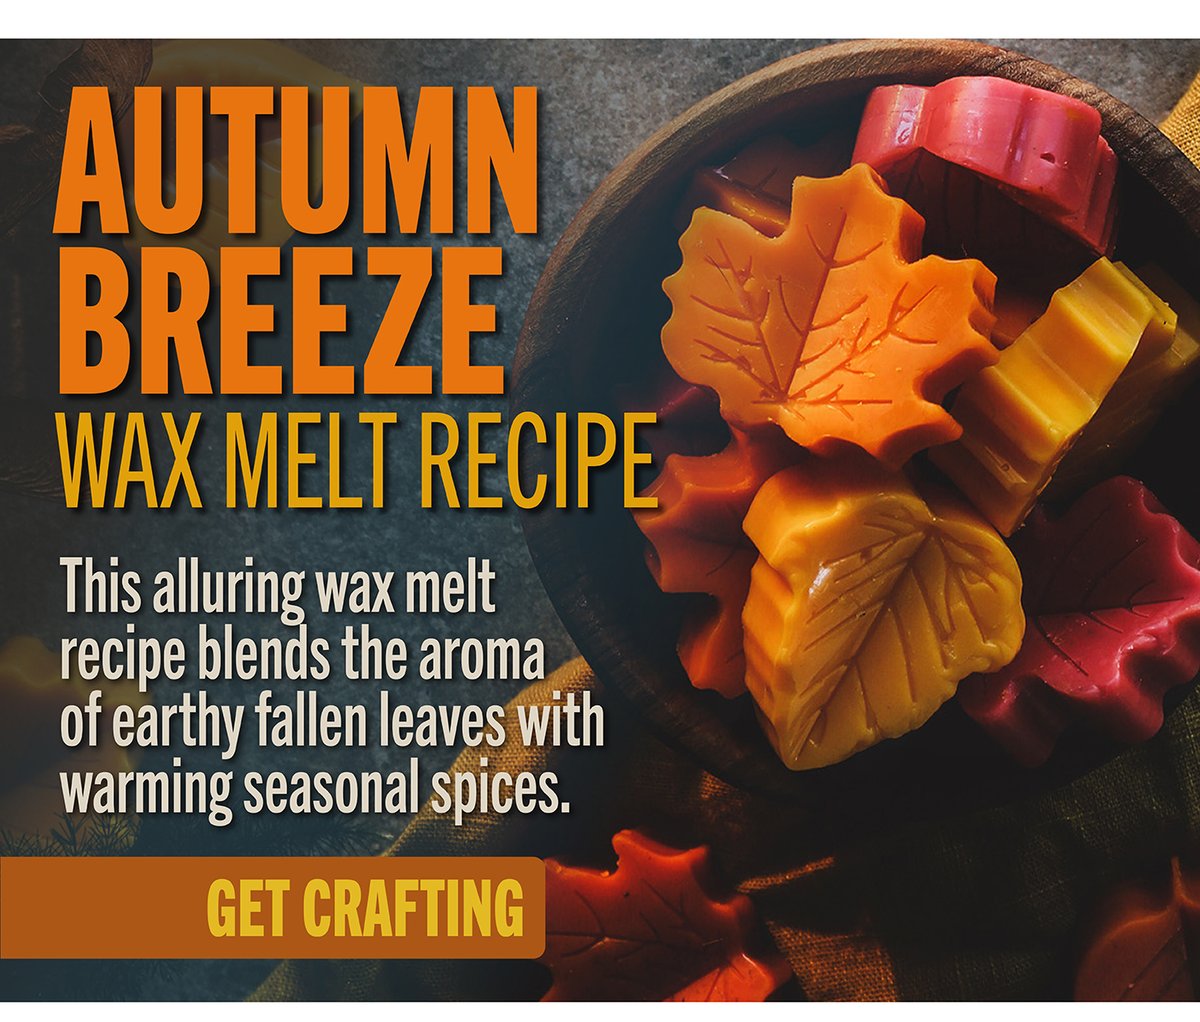 Autumn Breeze Wax Melt Recipe